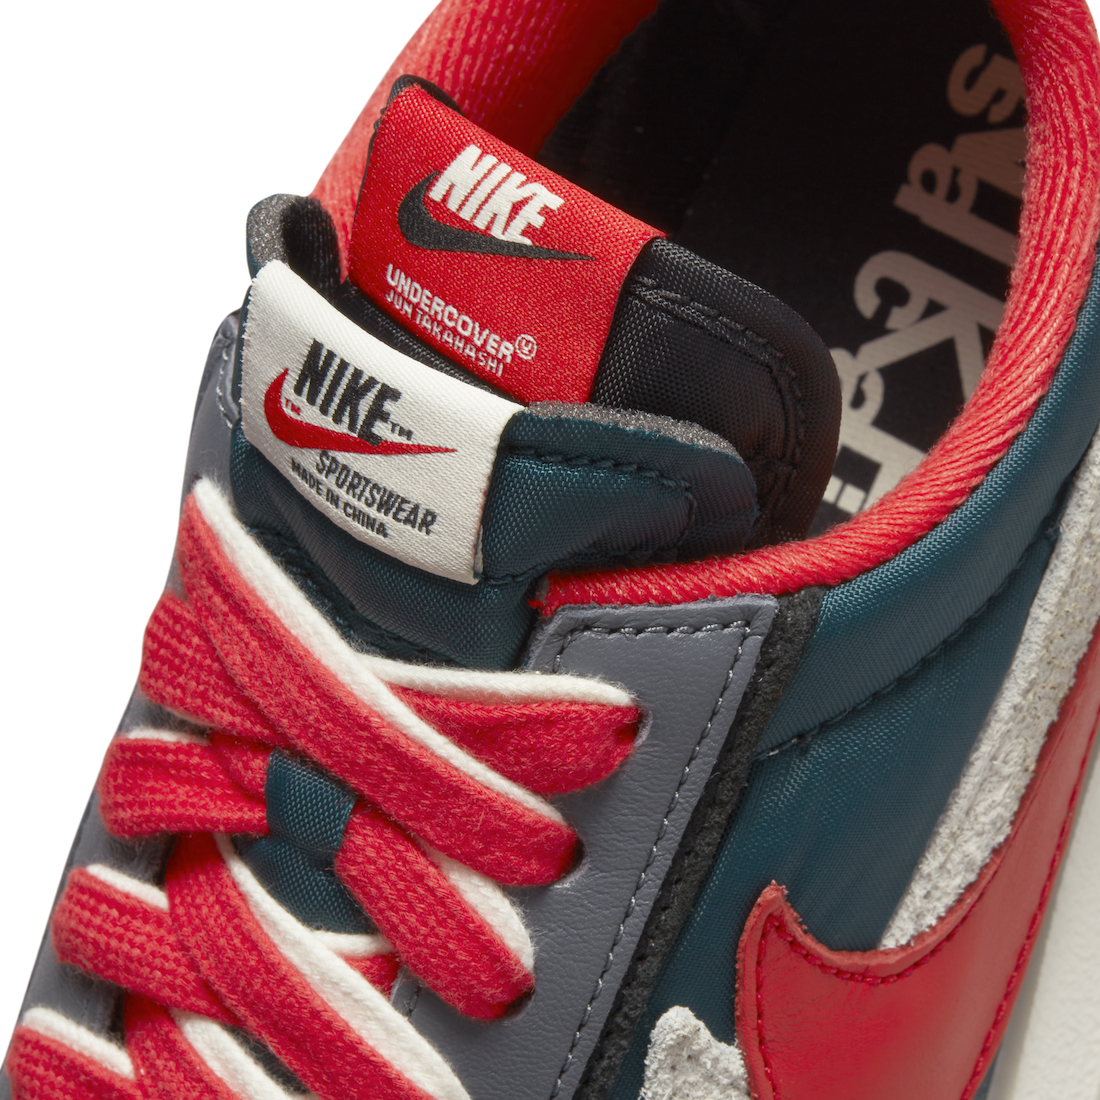 Undercover Sacai Nike LDWaffle 2021 Release Date - Sneaker Bar Detroit